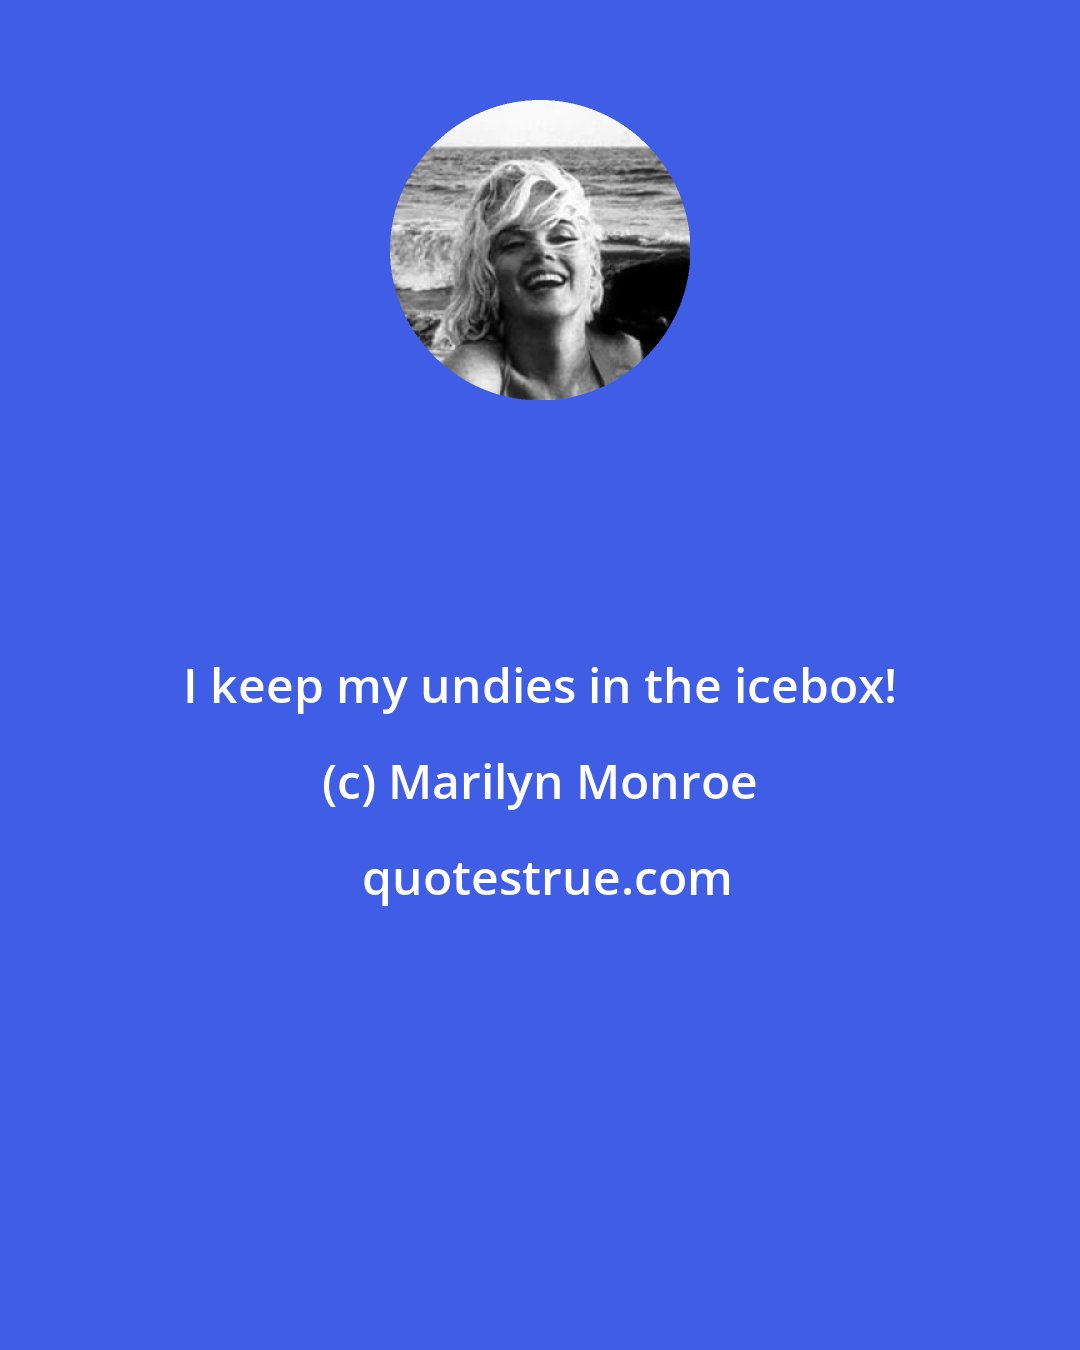 Marilyn Monroe: I keep my undies in the icebox!